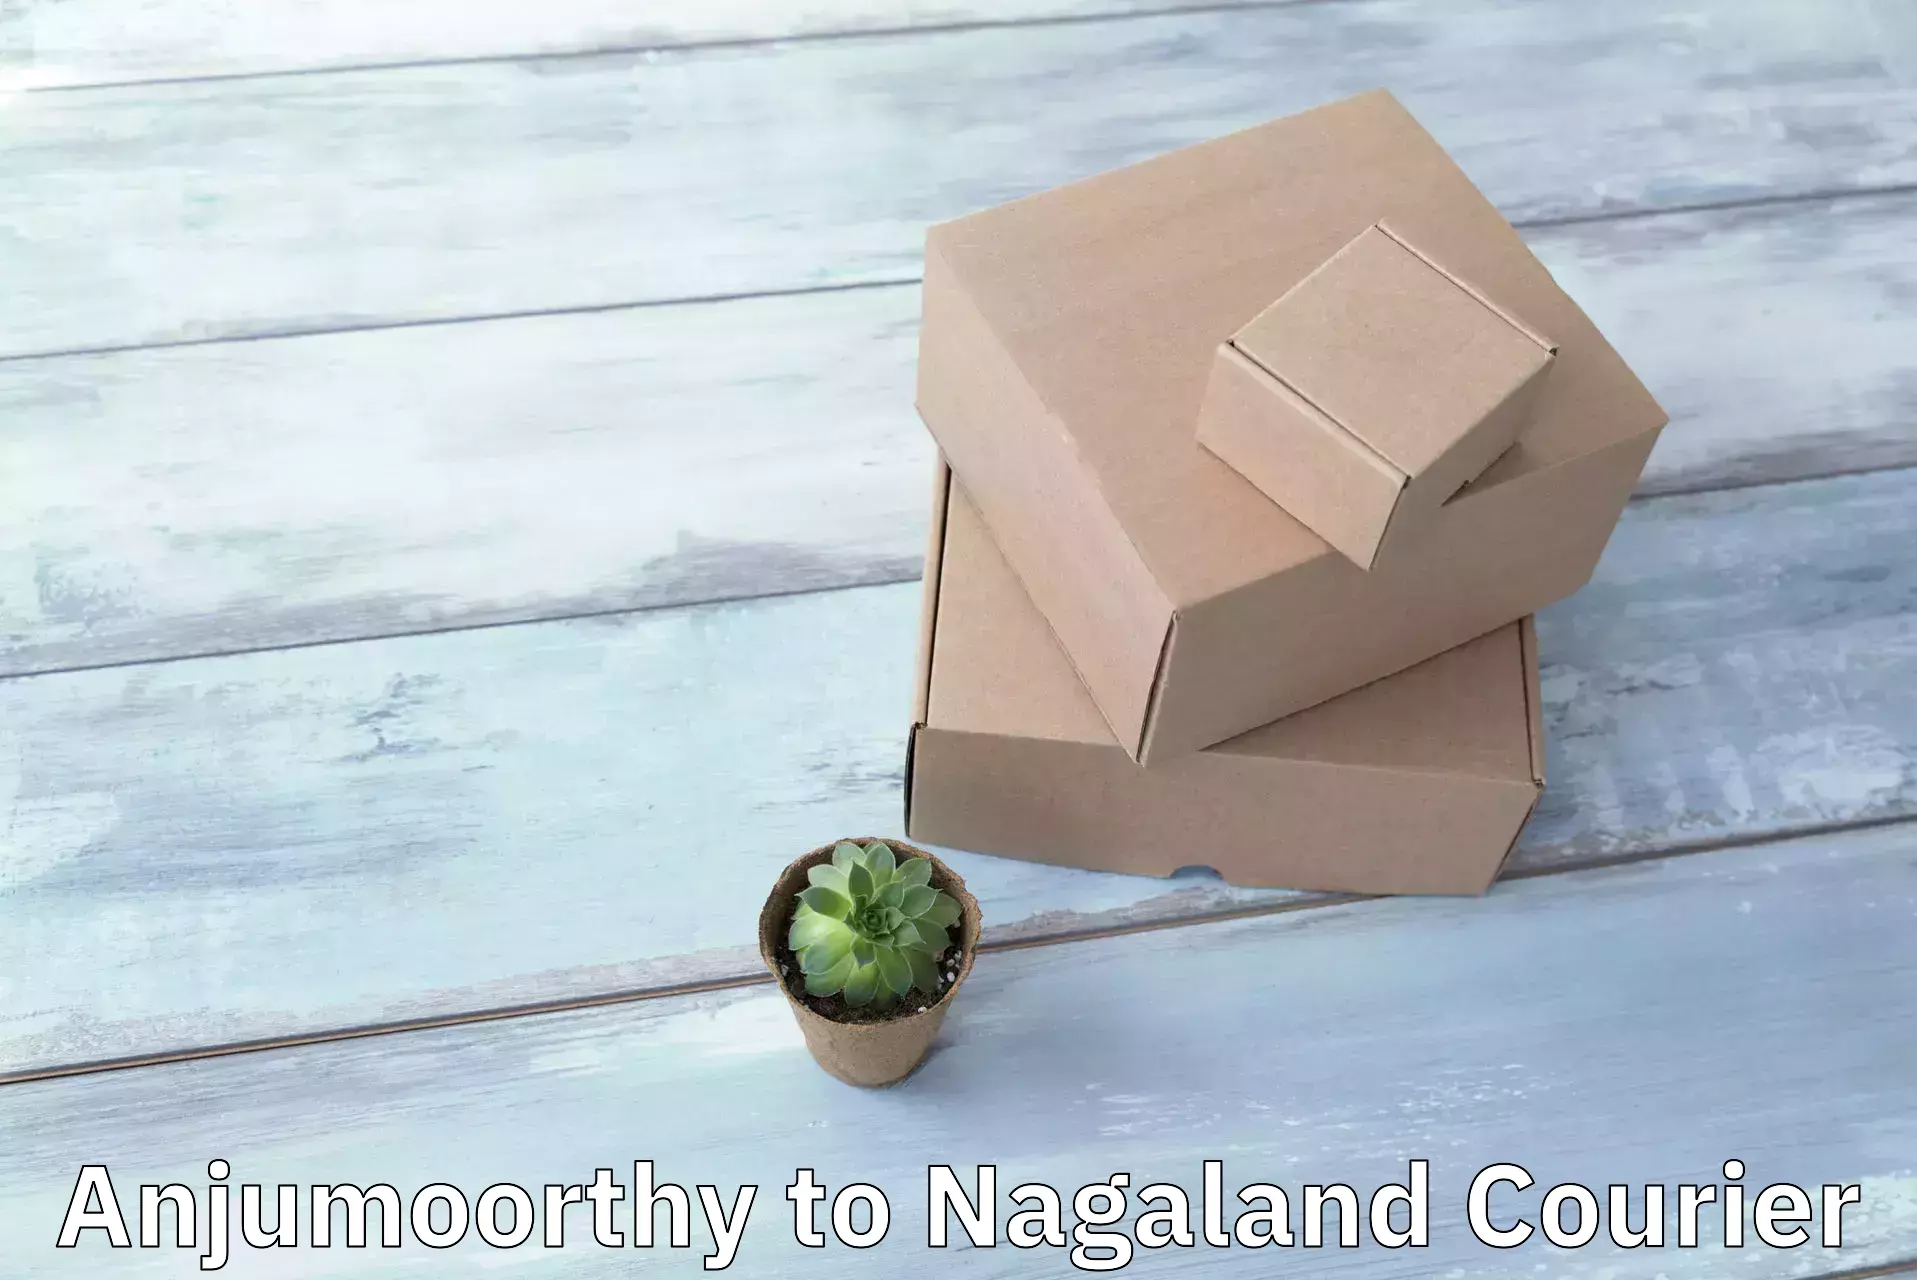 Express courier capabilities Anjumoorthy to Nagaland